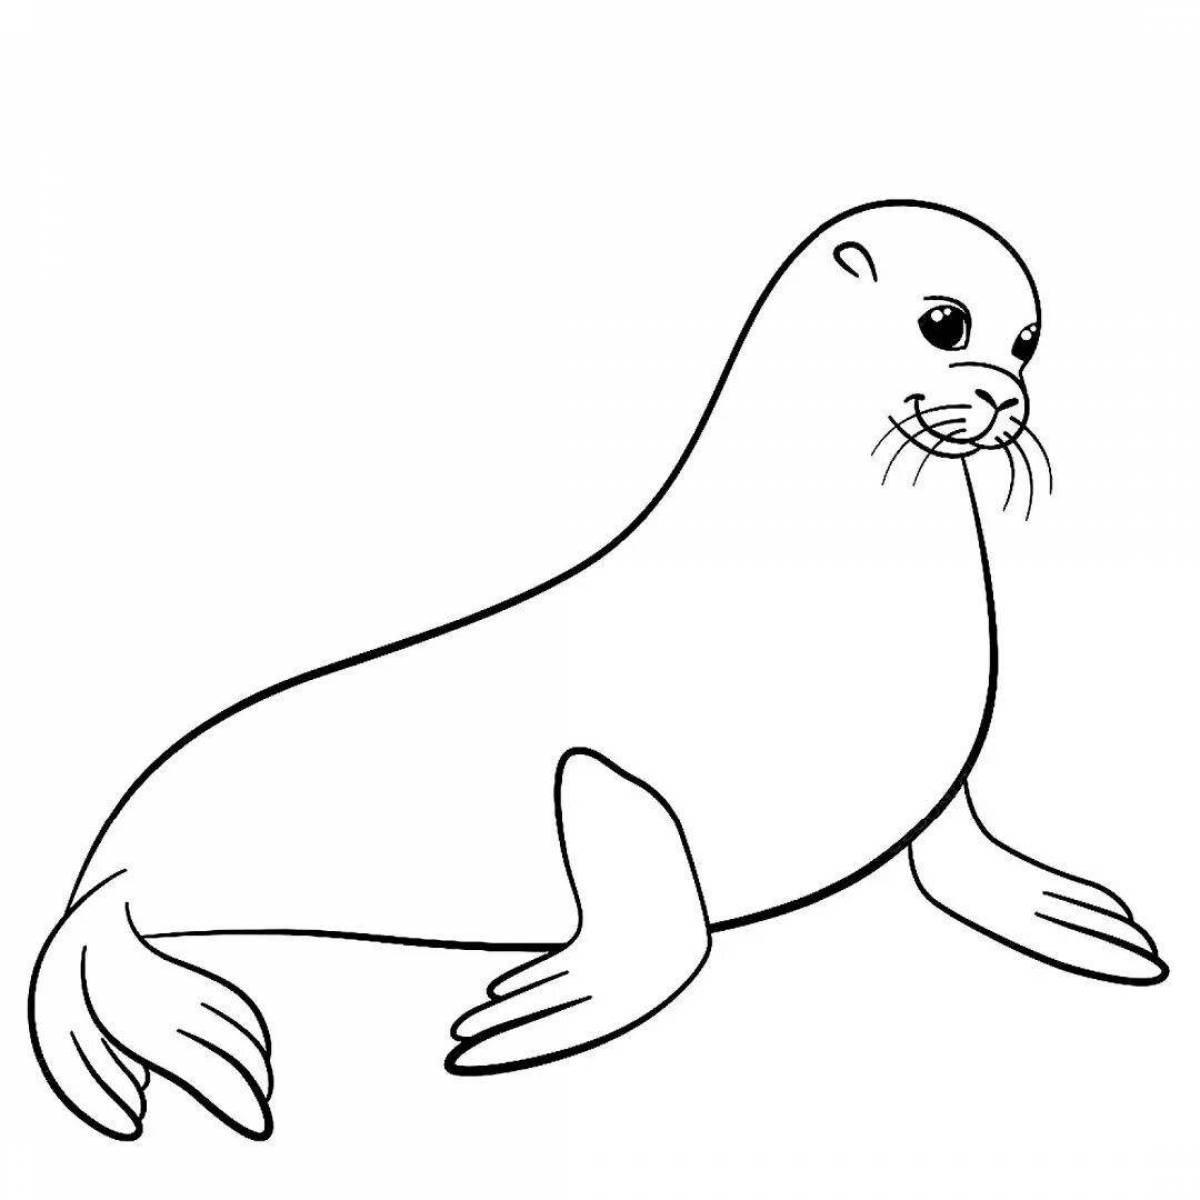 Coloring book adorable harbor seal